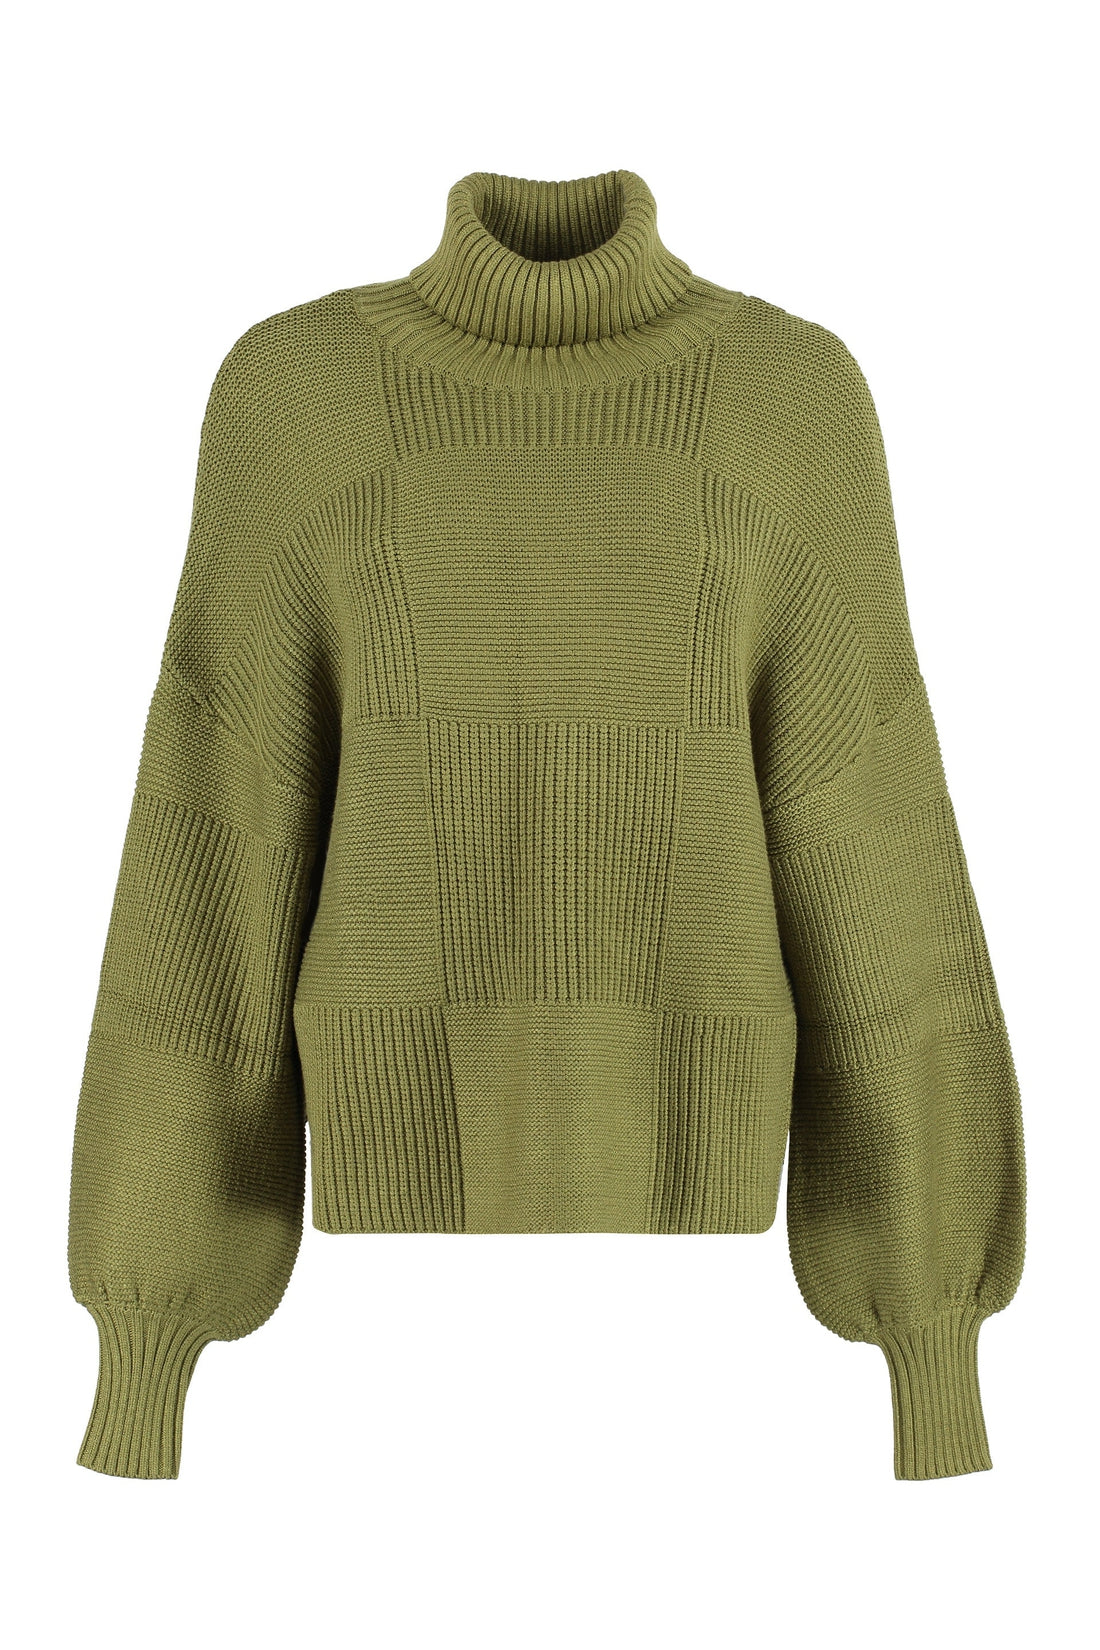 STAUD-OUTLET-SALE-Benny turtleneck sweater-ARCHIVIST